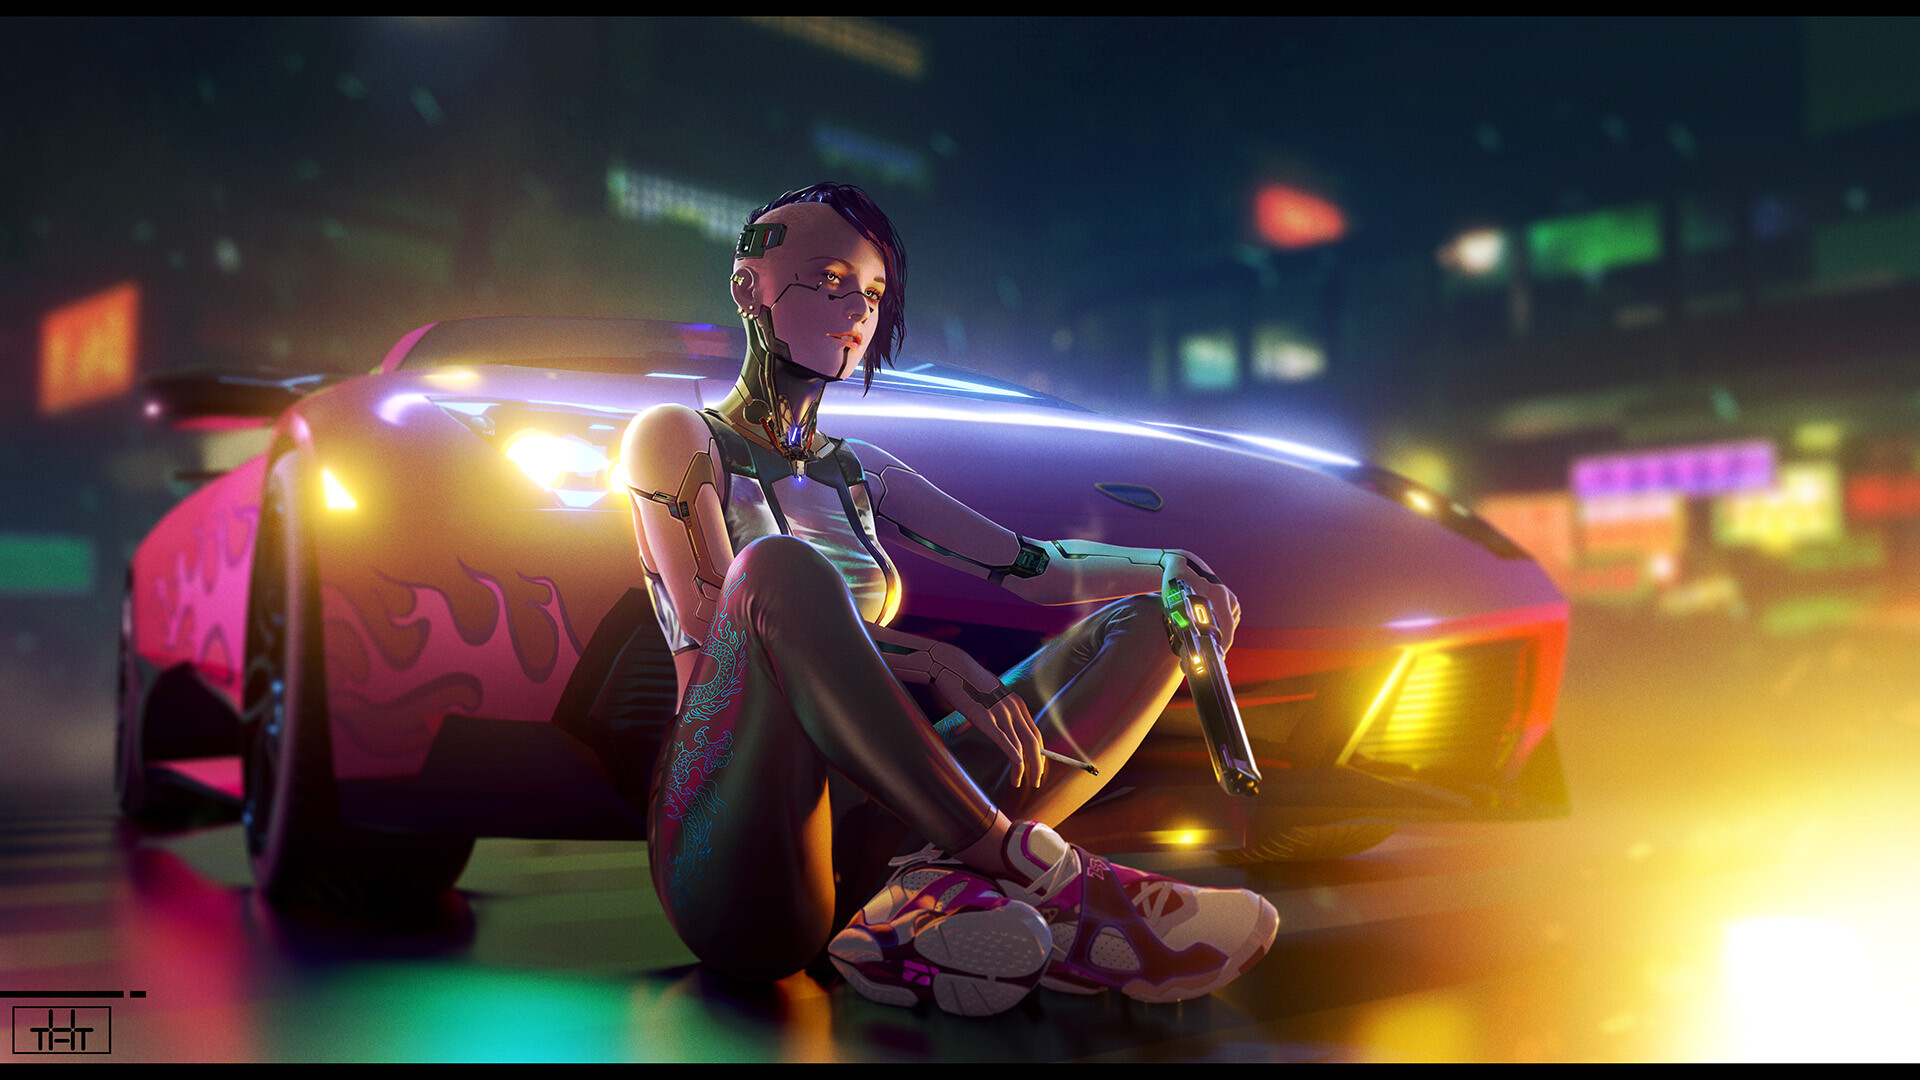 Yulin Li Drawing Cyberpunk Women Short Hair Weapon Cyborg Sneakers Car Pink Night 1920x1080